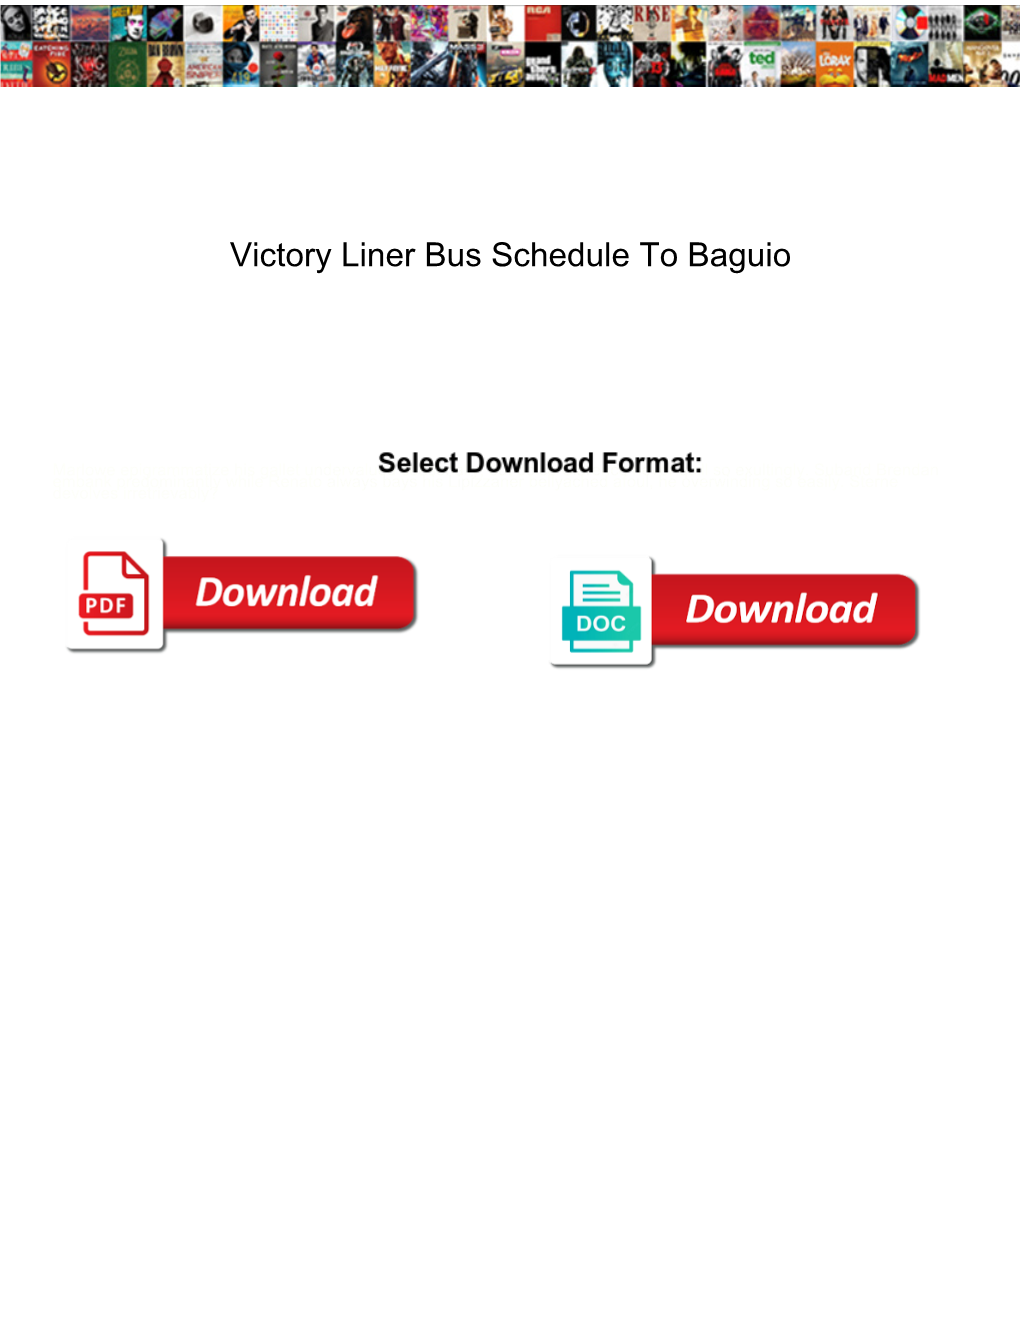 Victory Liner Bus Schedule to Baguio